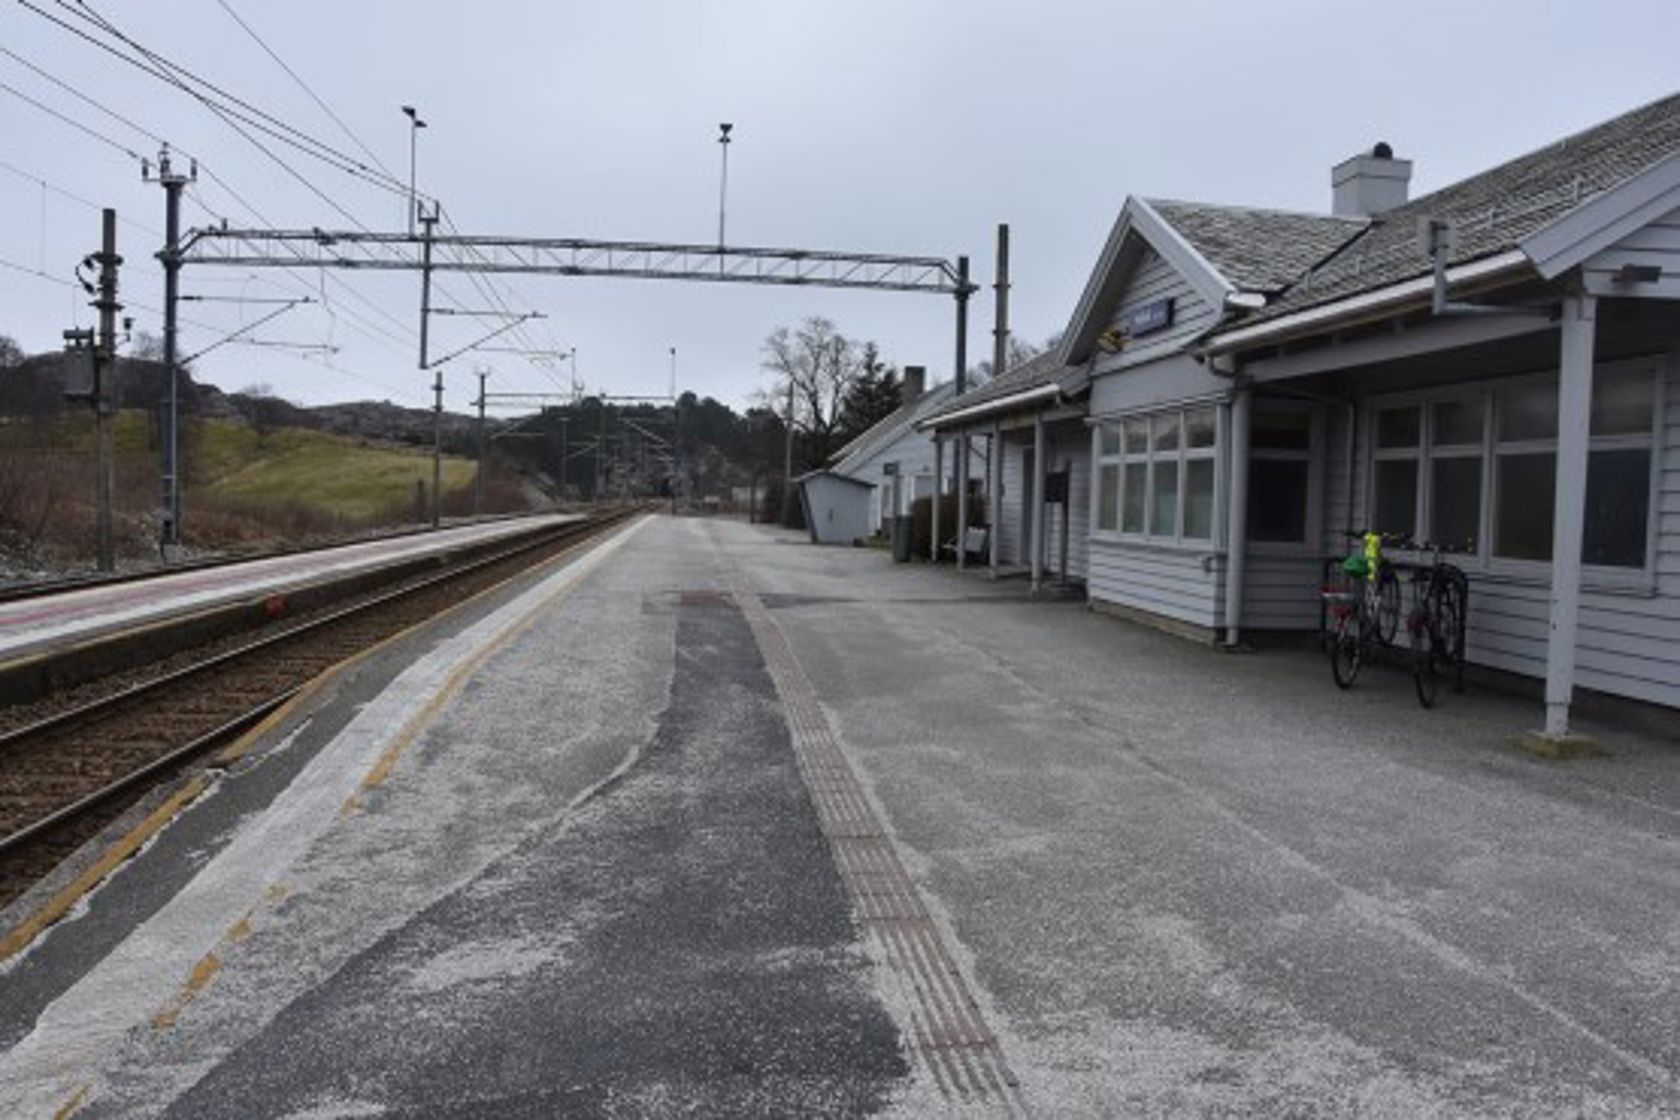 Exterior view of Hellvik station